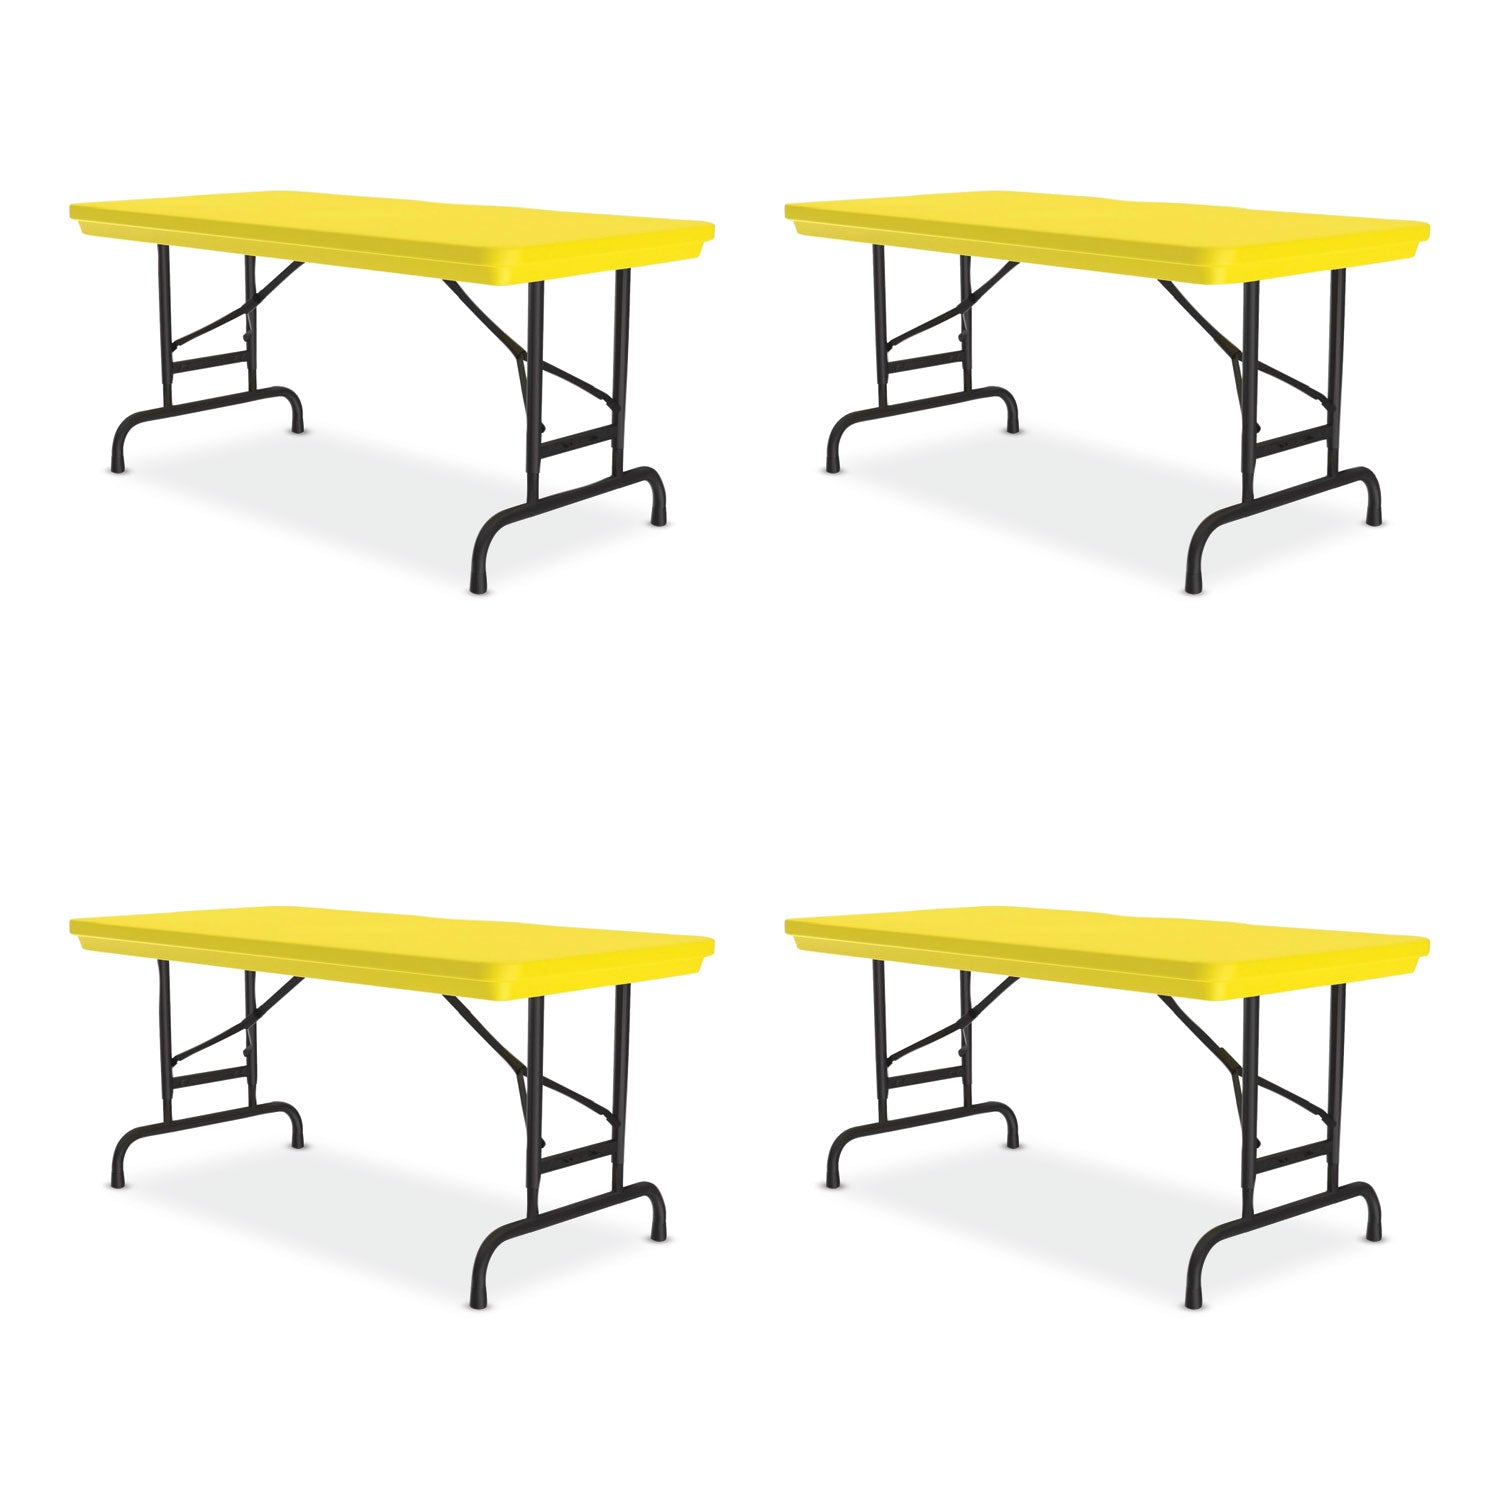 adjustable-folding-table-rectangular-48-x-24-x-22-to-32-yellow-top-black-legs-4-pallet-ships-in-4-6-business-days_crlra2448284p - 1